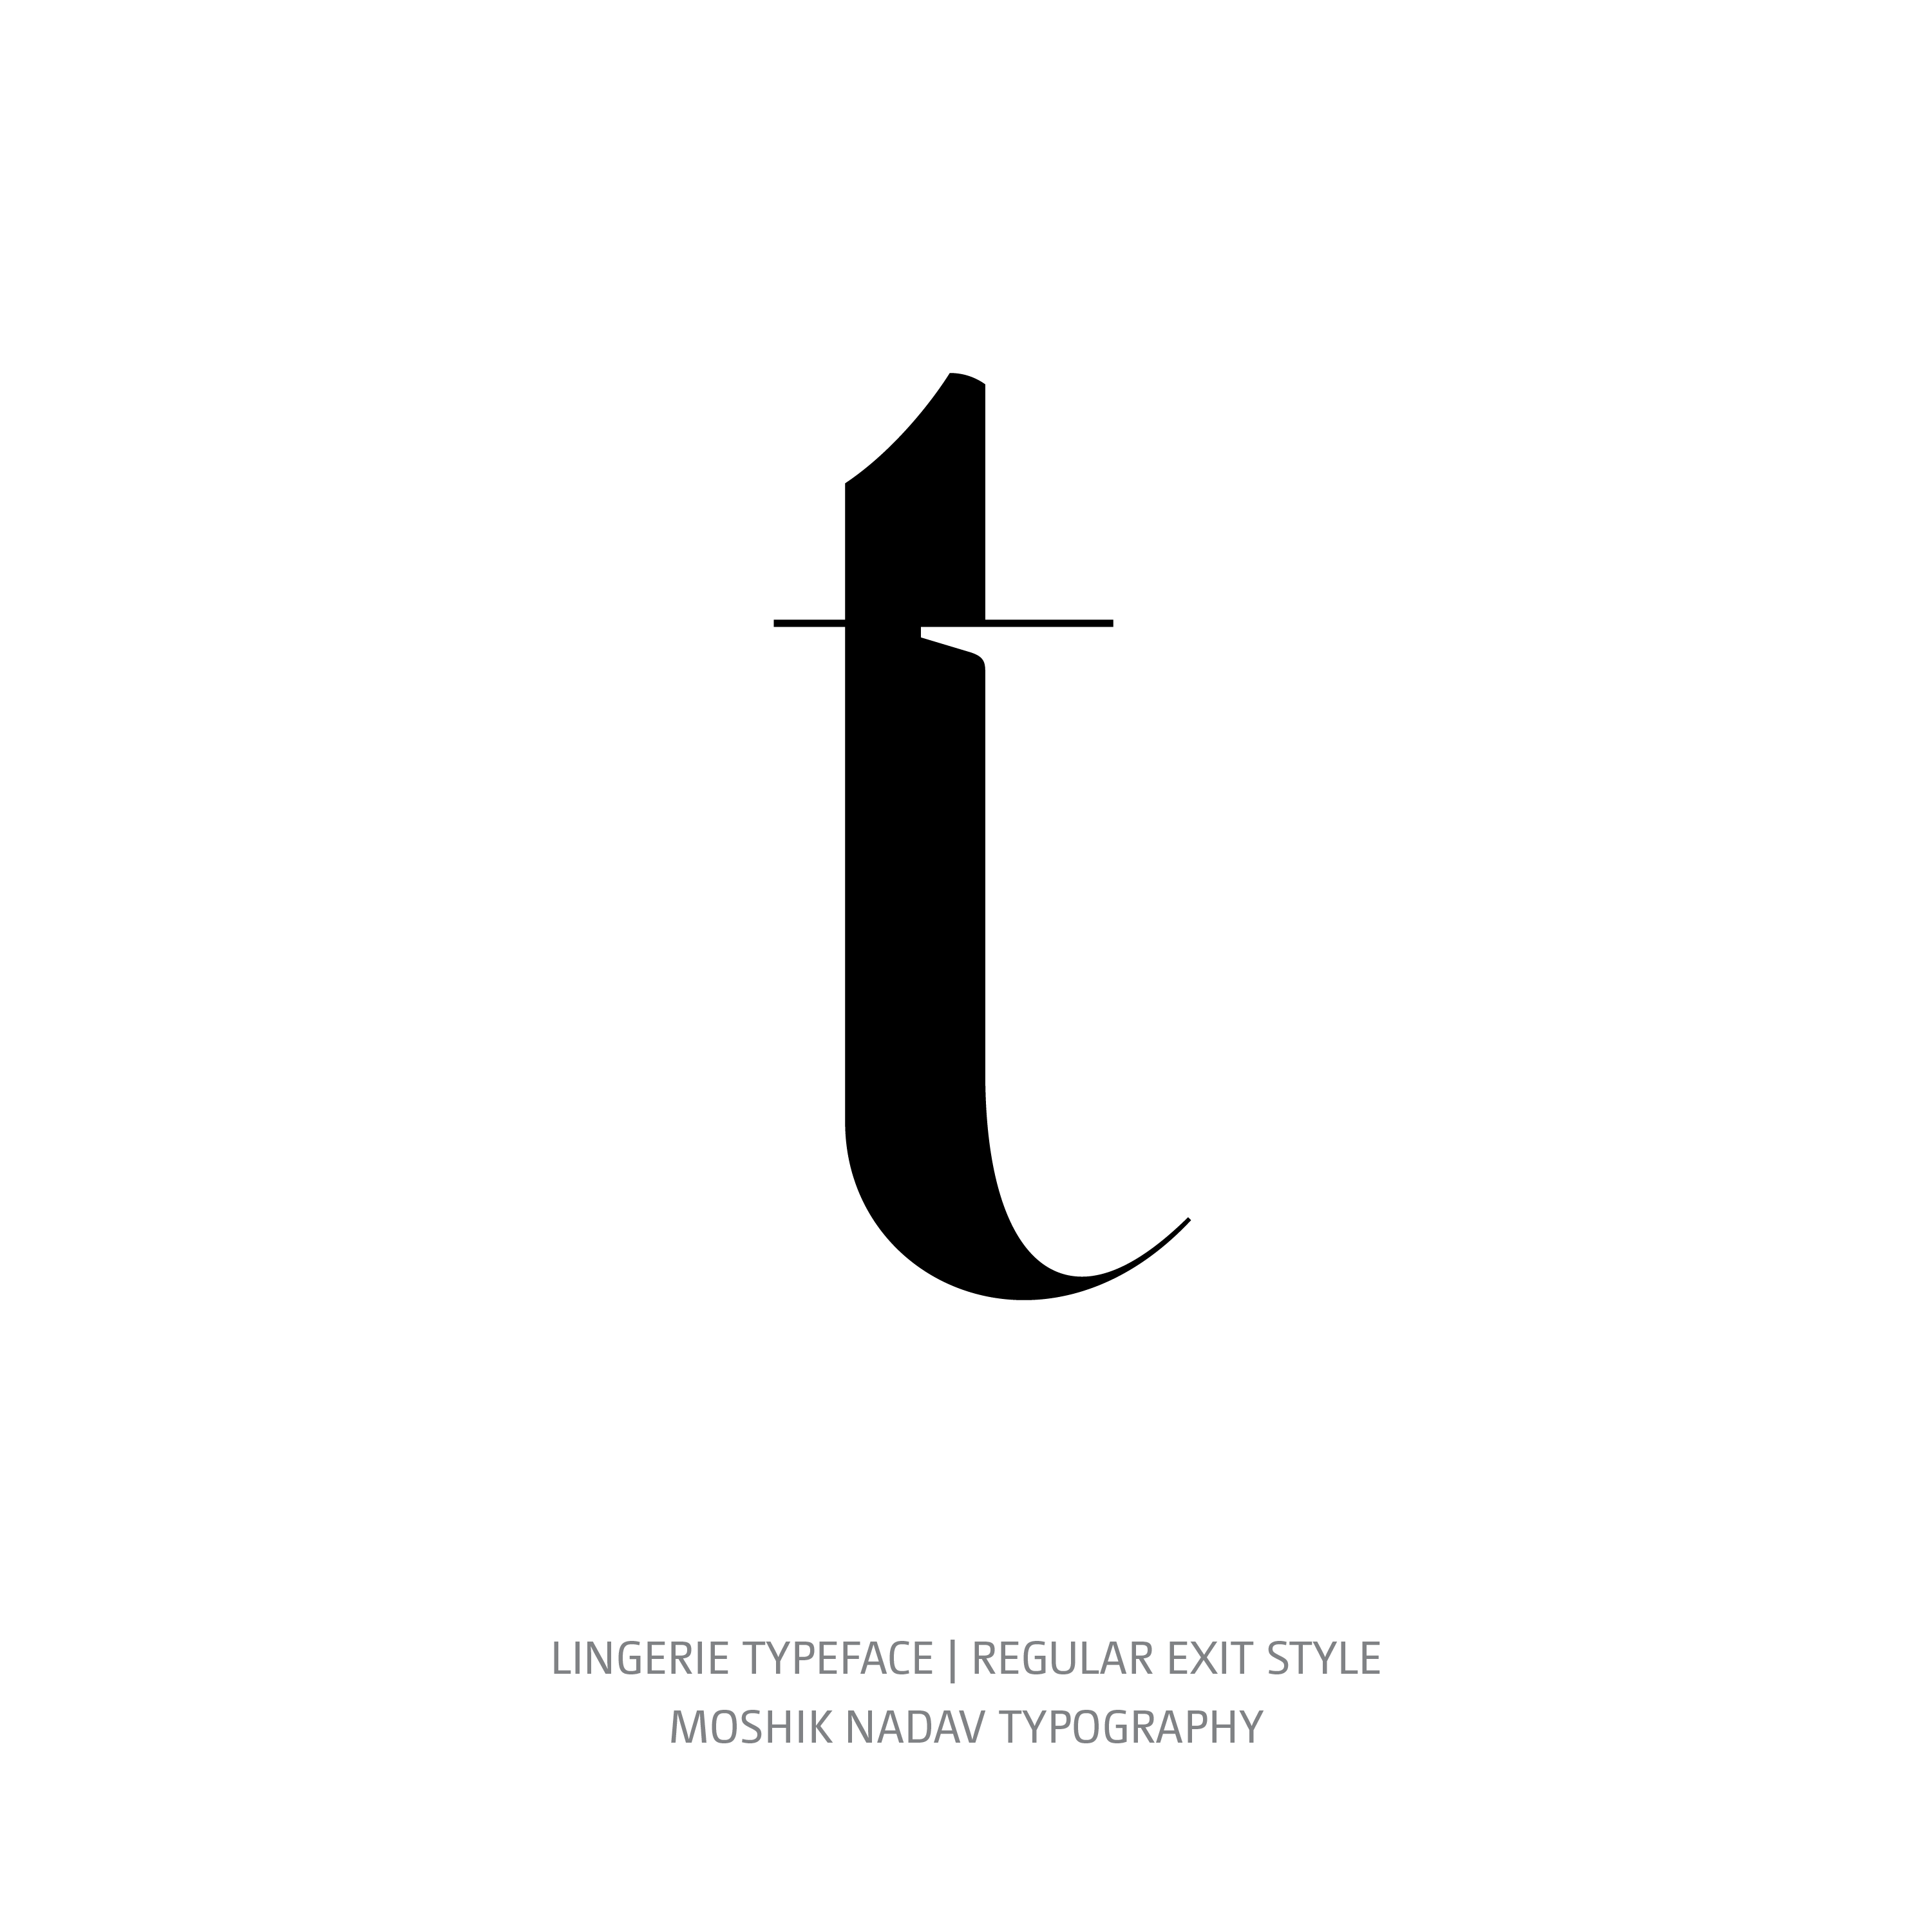 Lingerie Typeface Regular Exit t